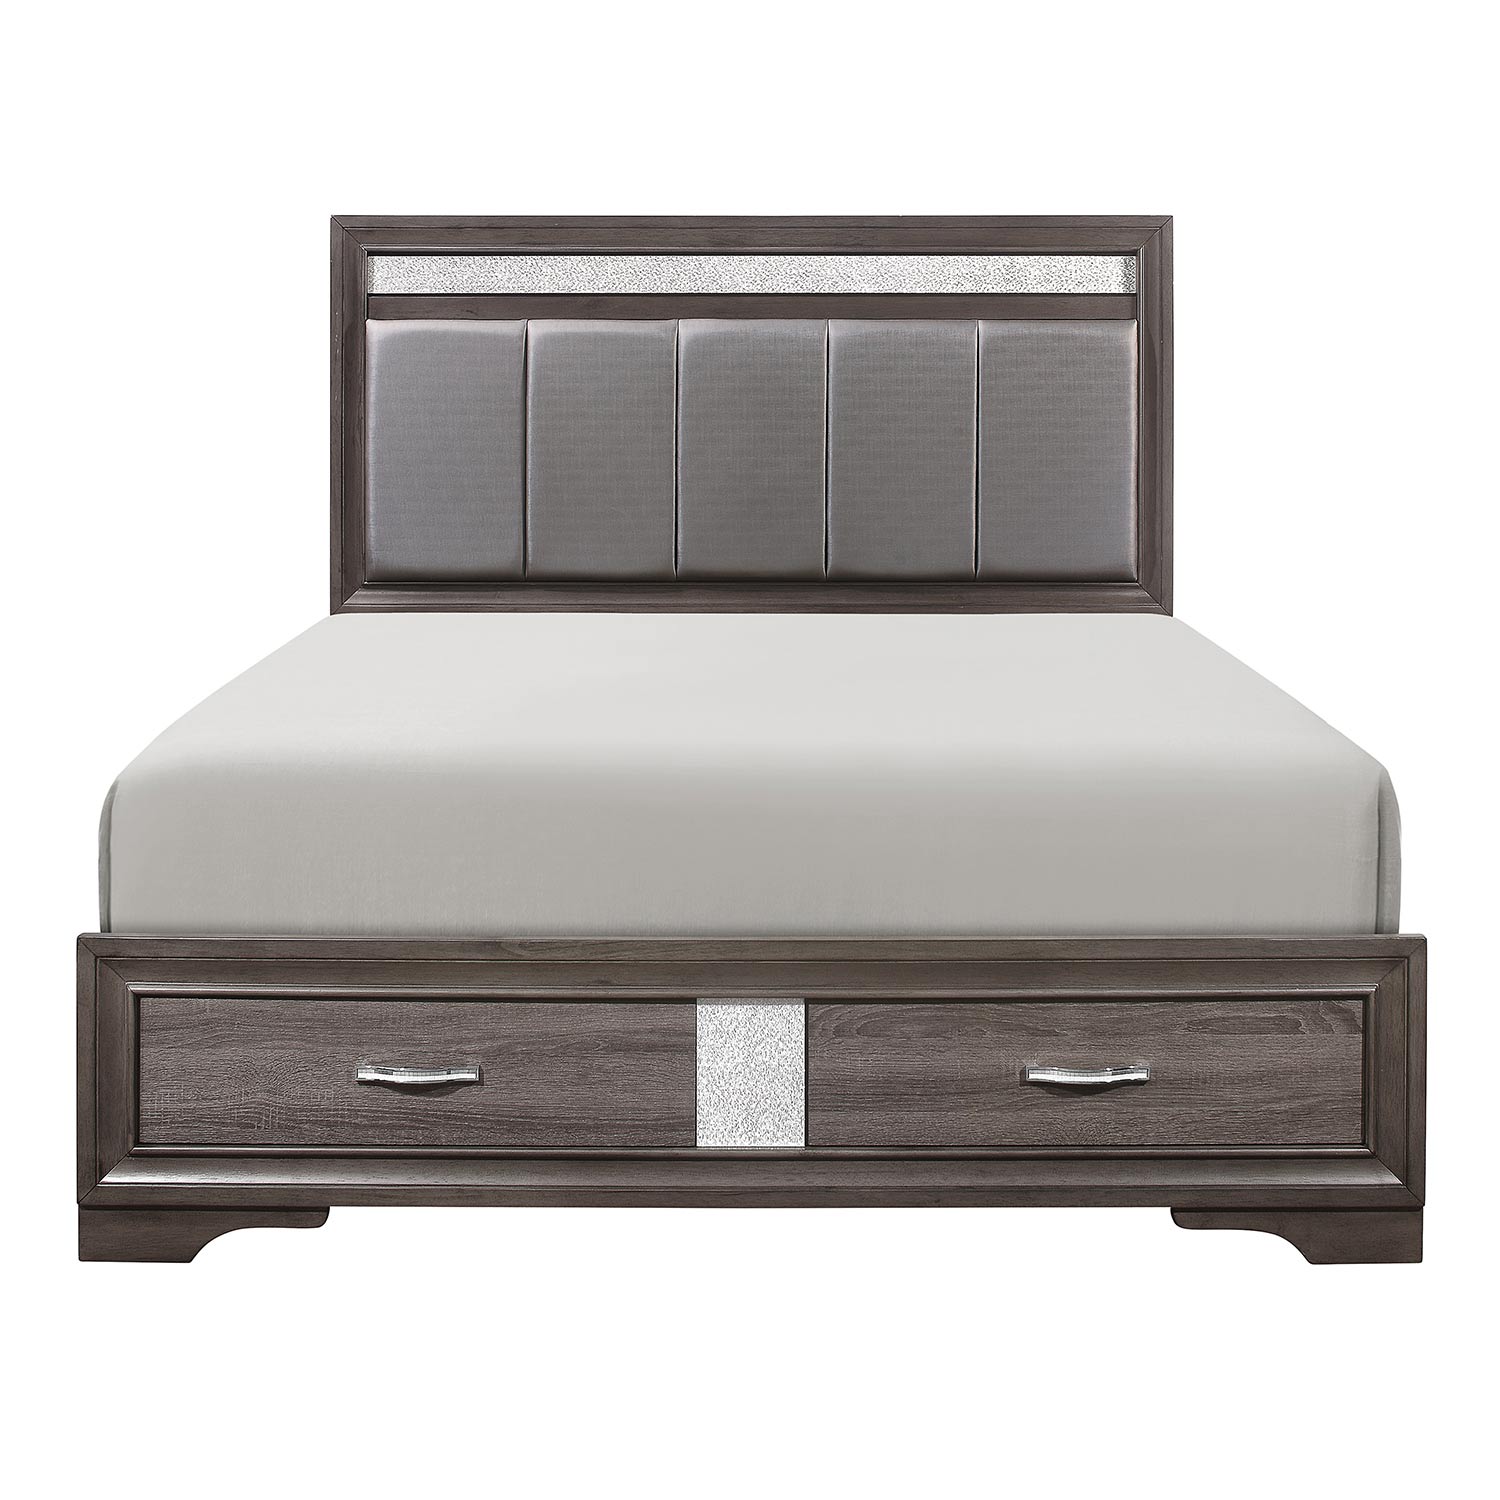 Homelegance Luster Storage Platform Bed - Gray and Silver Glitter